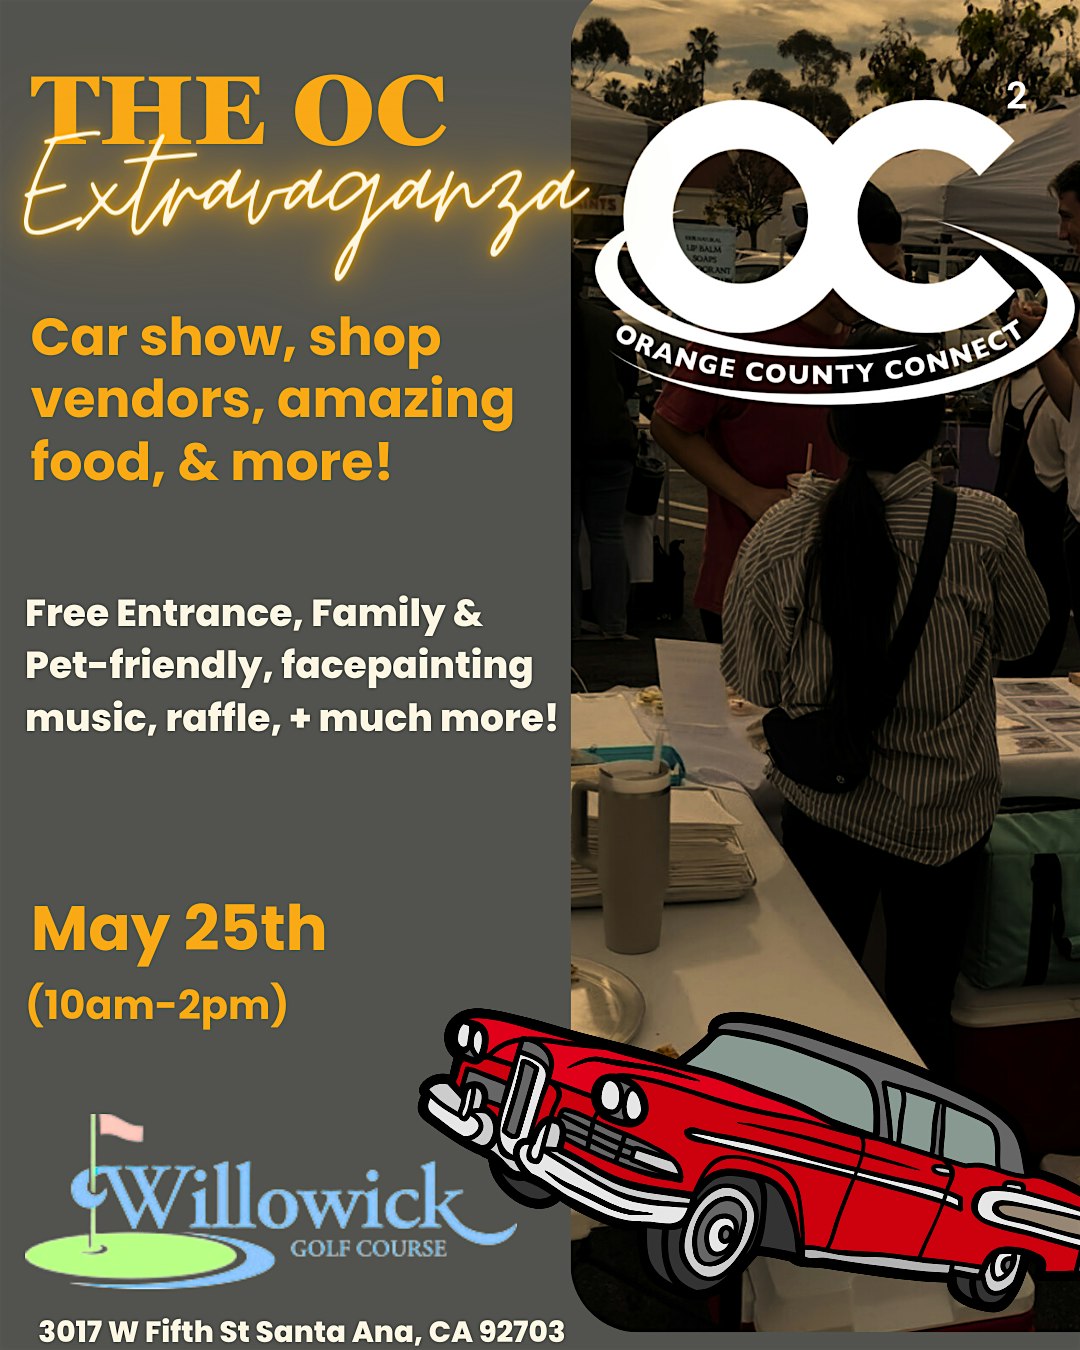 Orange County Extravaganza (Vendors, car show, tons of fun)!!